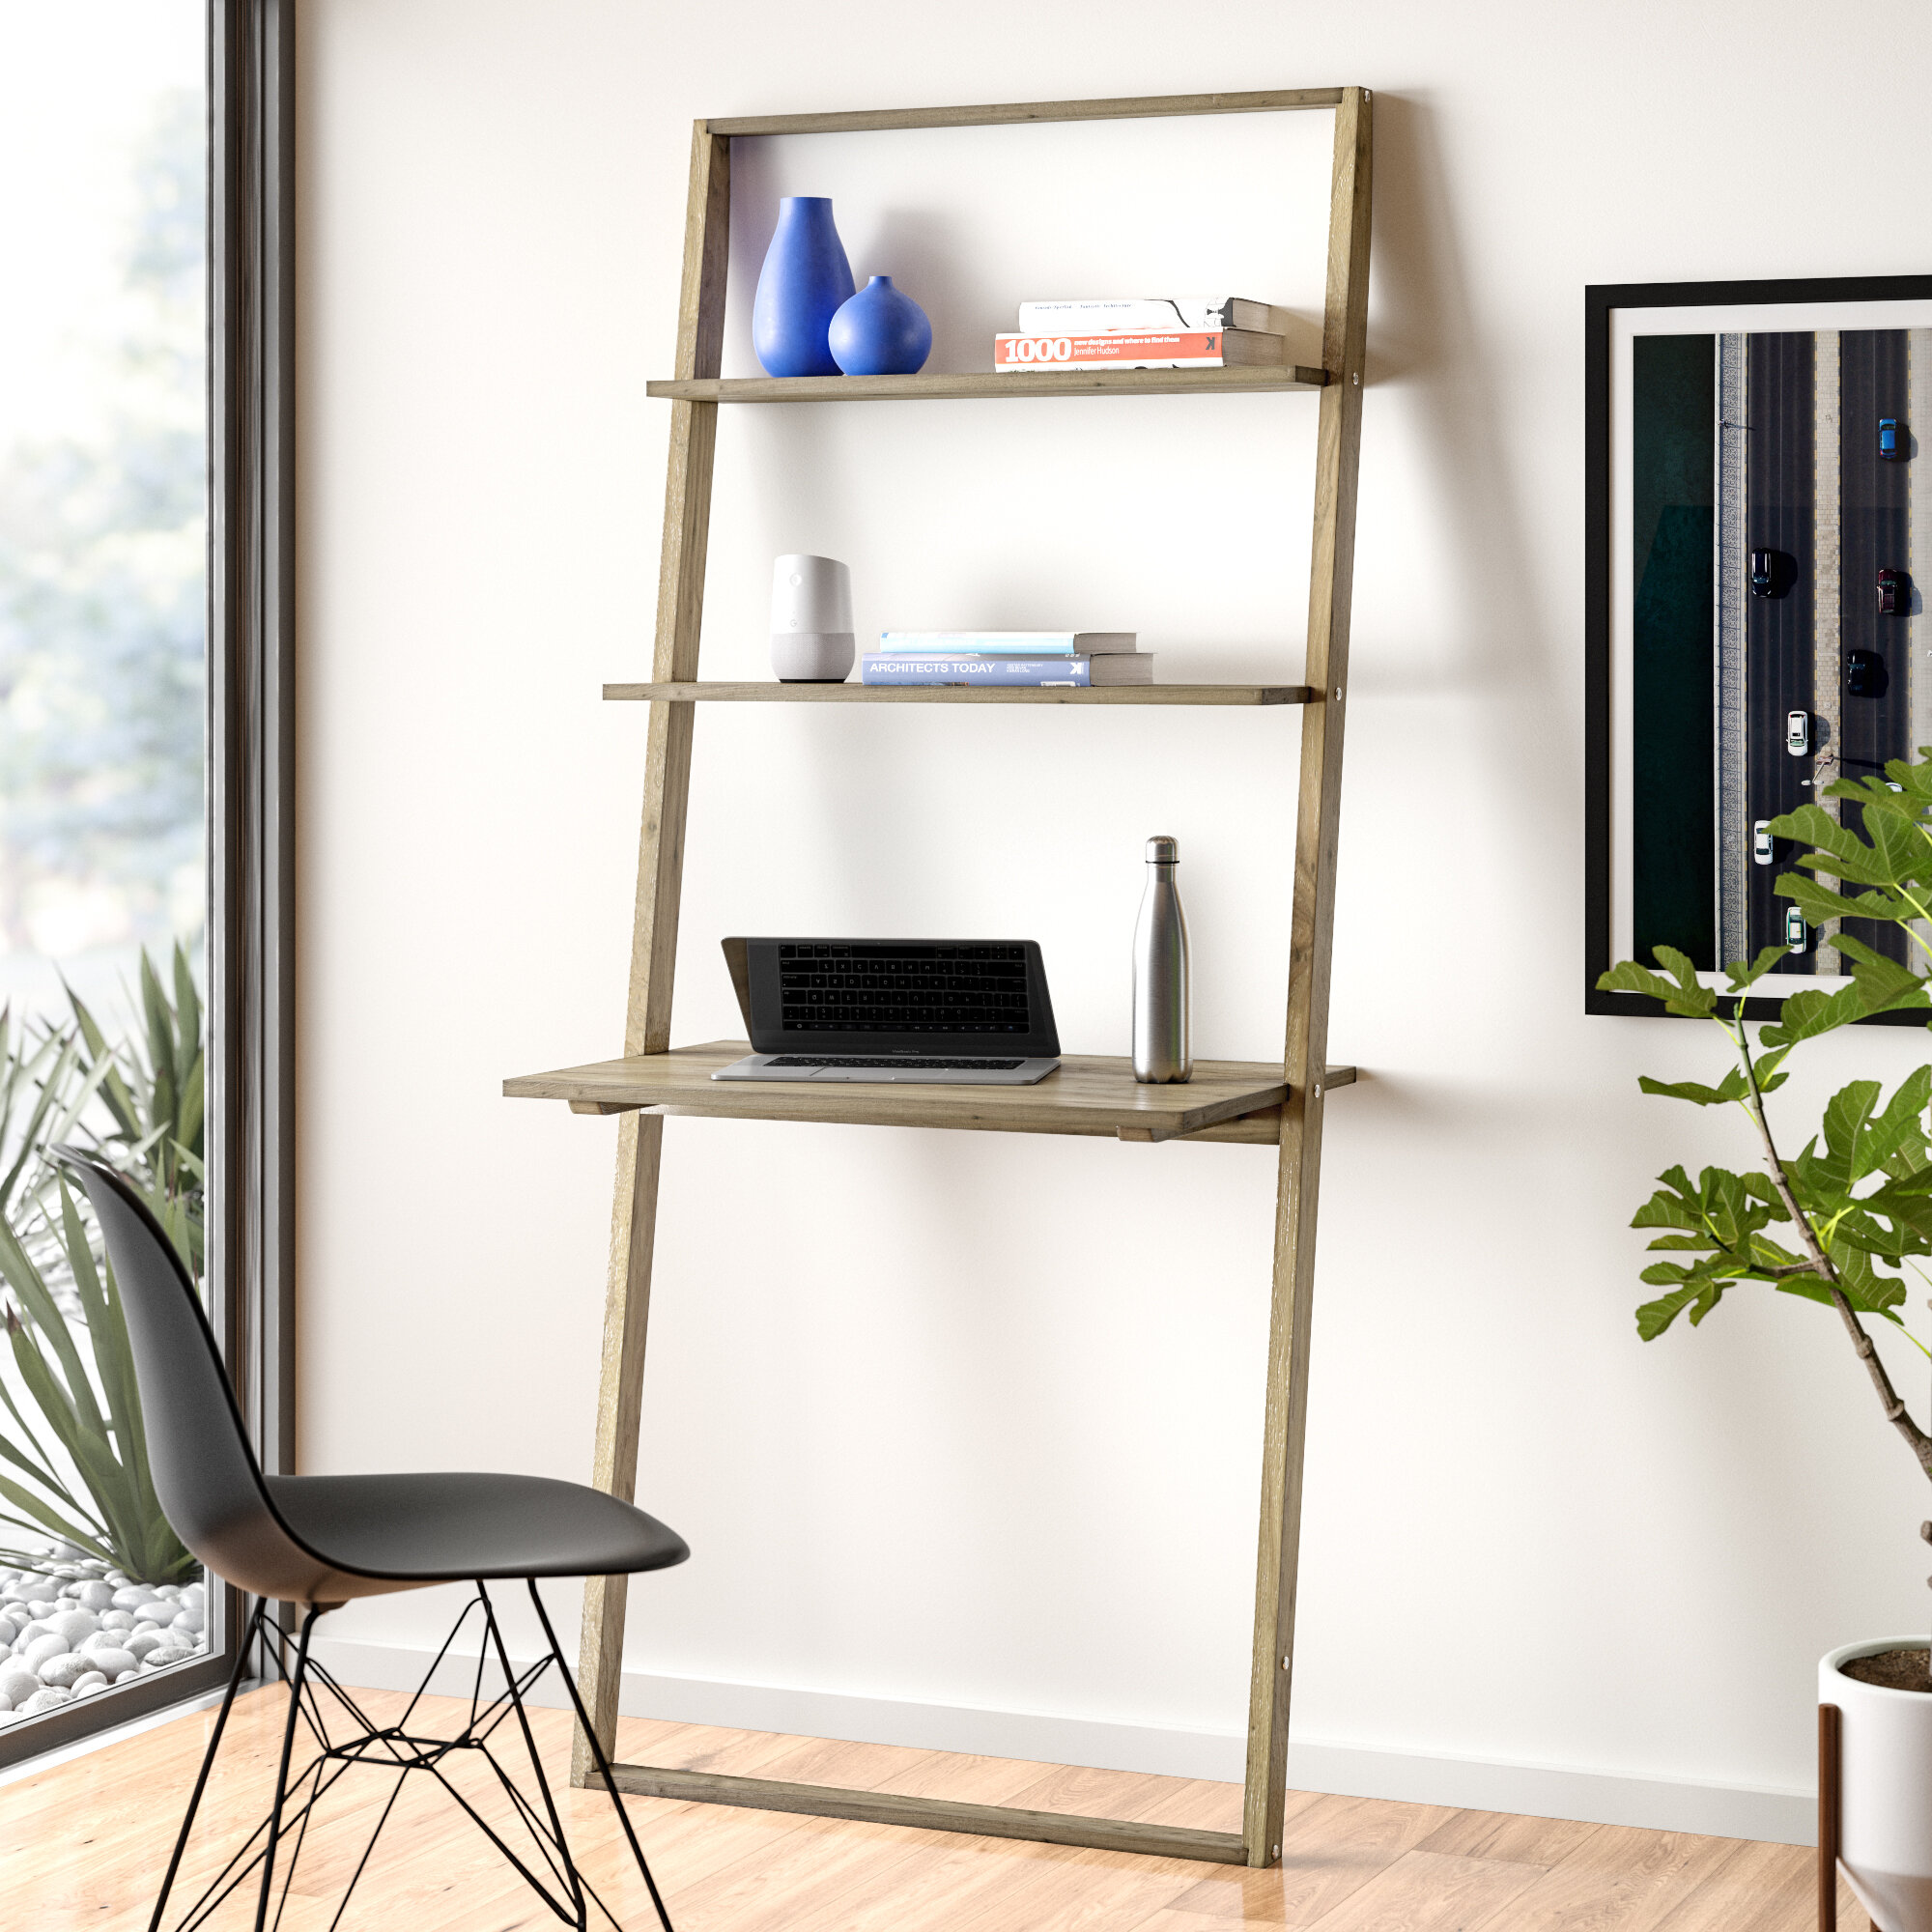 Clintwood Solid Wood Leaning Ladder Desk Reviews Allmodern